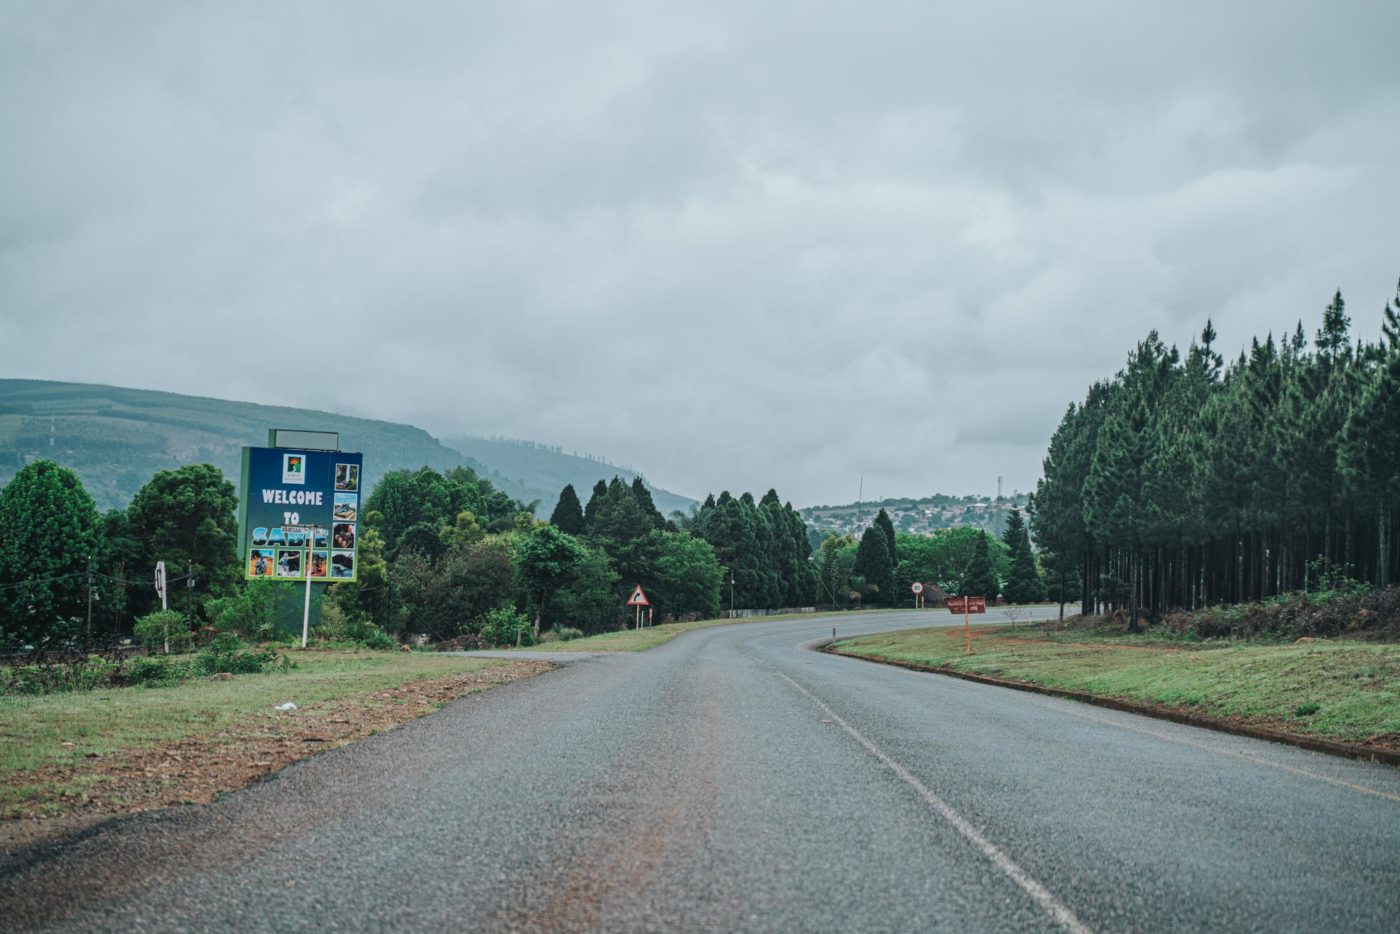 Panaroma route road